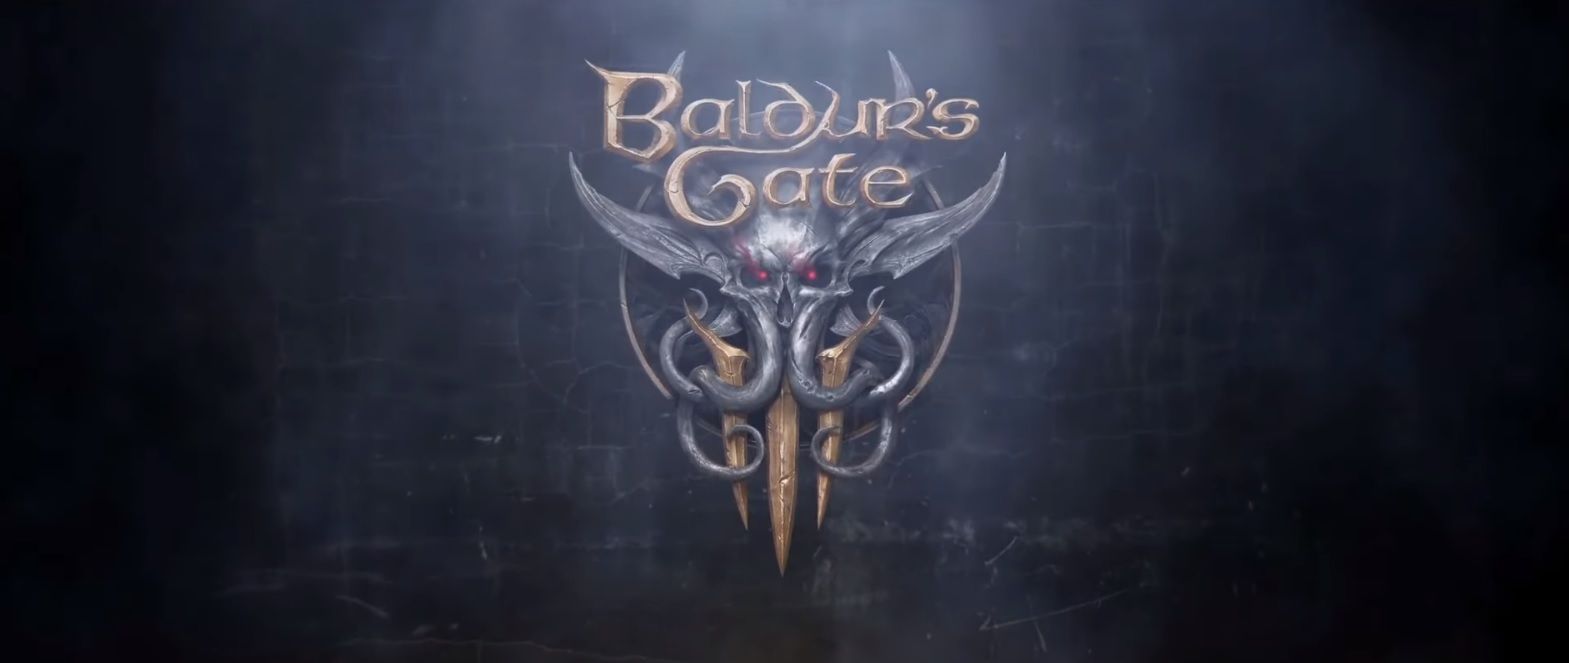 Baldurs Gate 3 logo gameplay